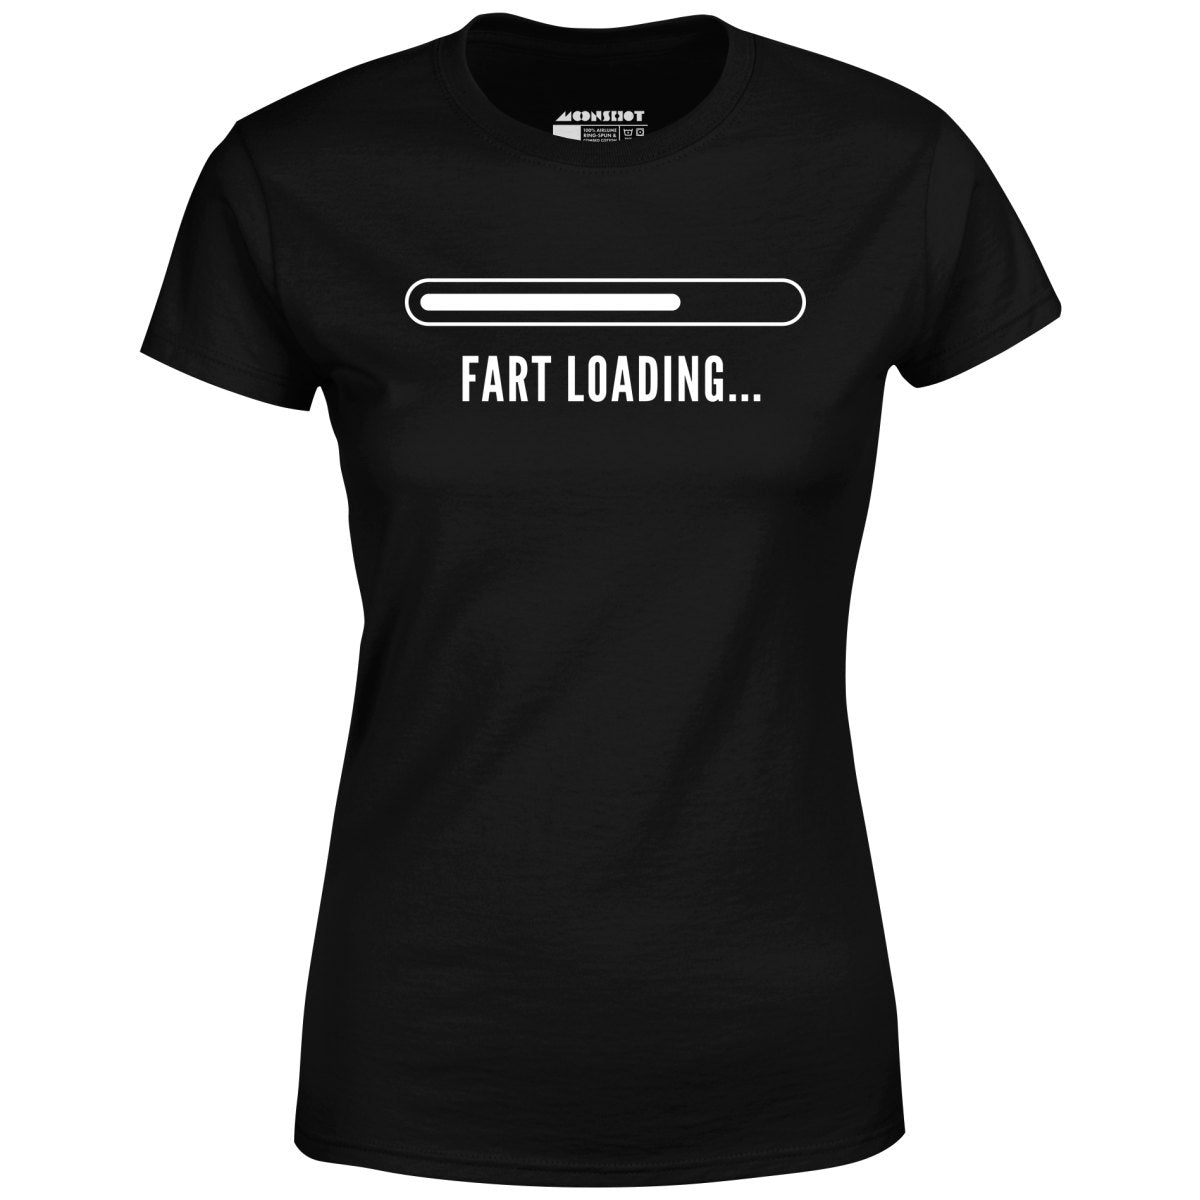 Fart Loading - Women's T-Shirt